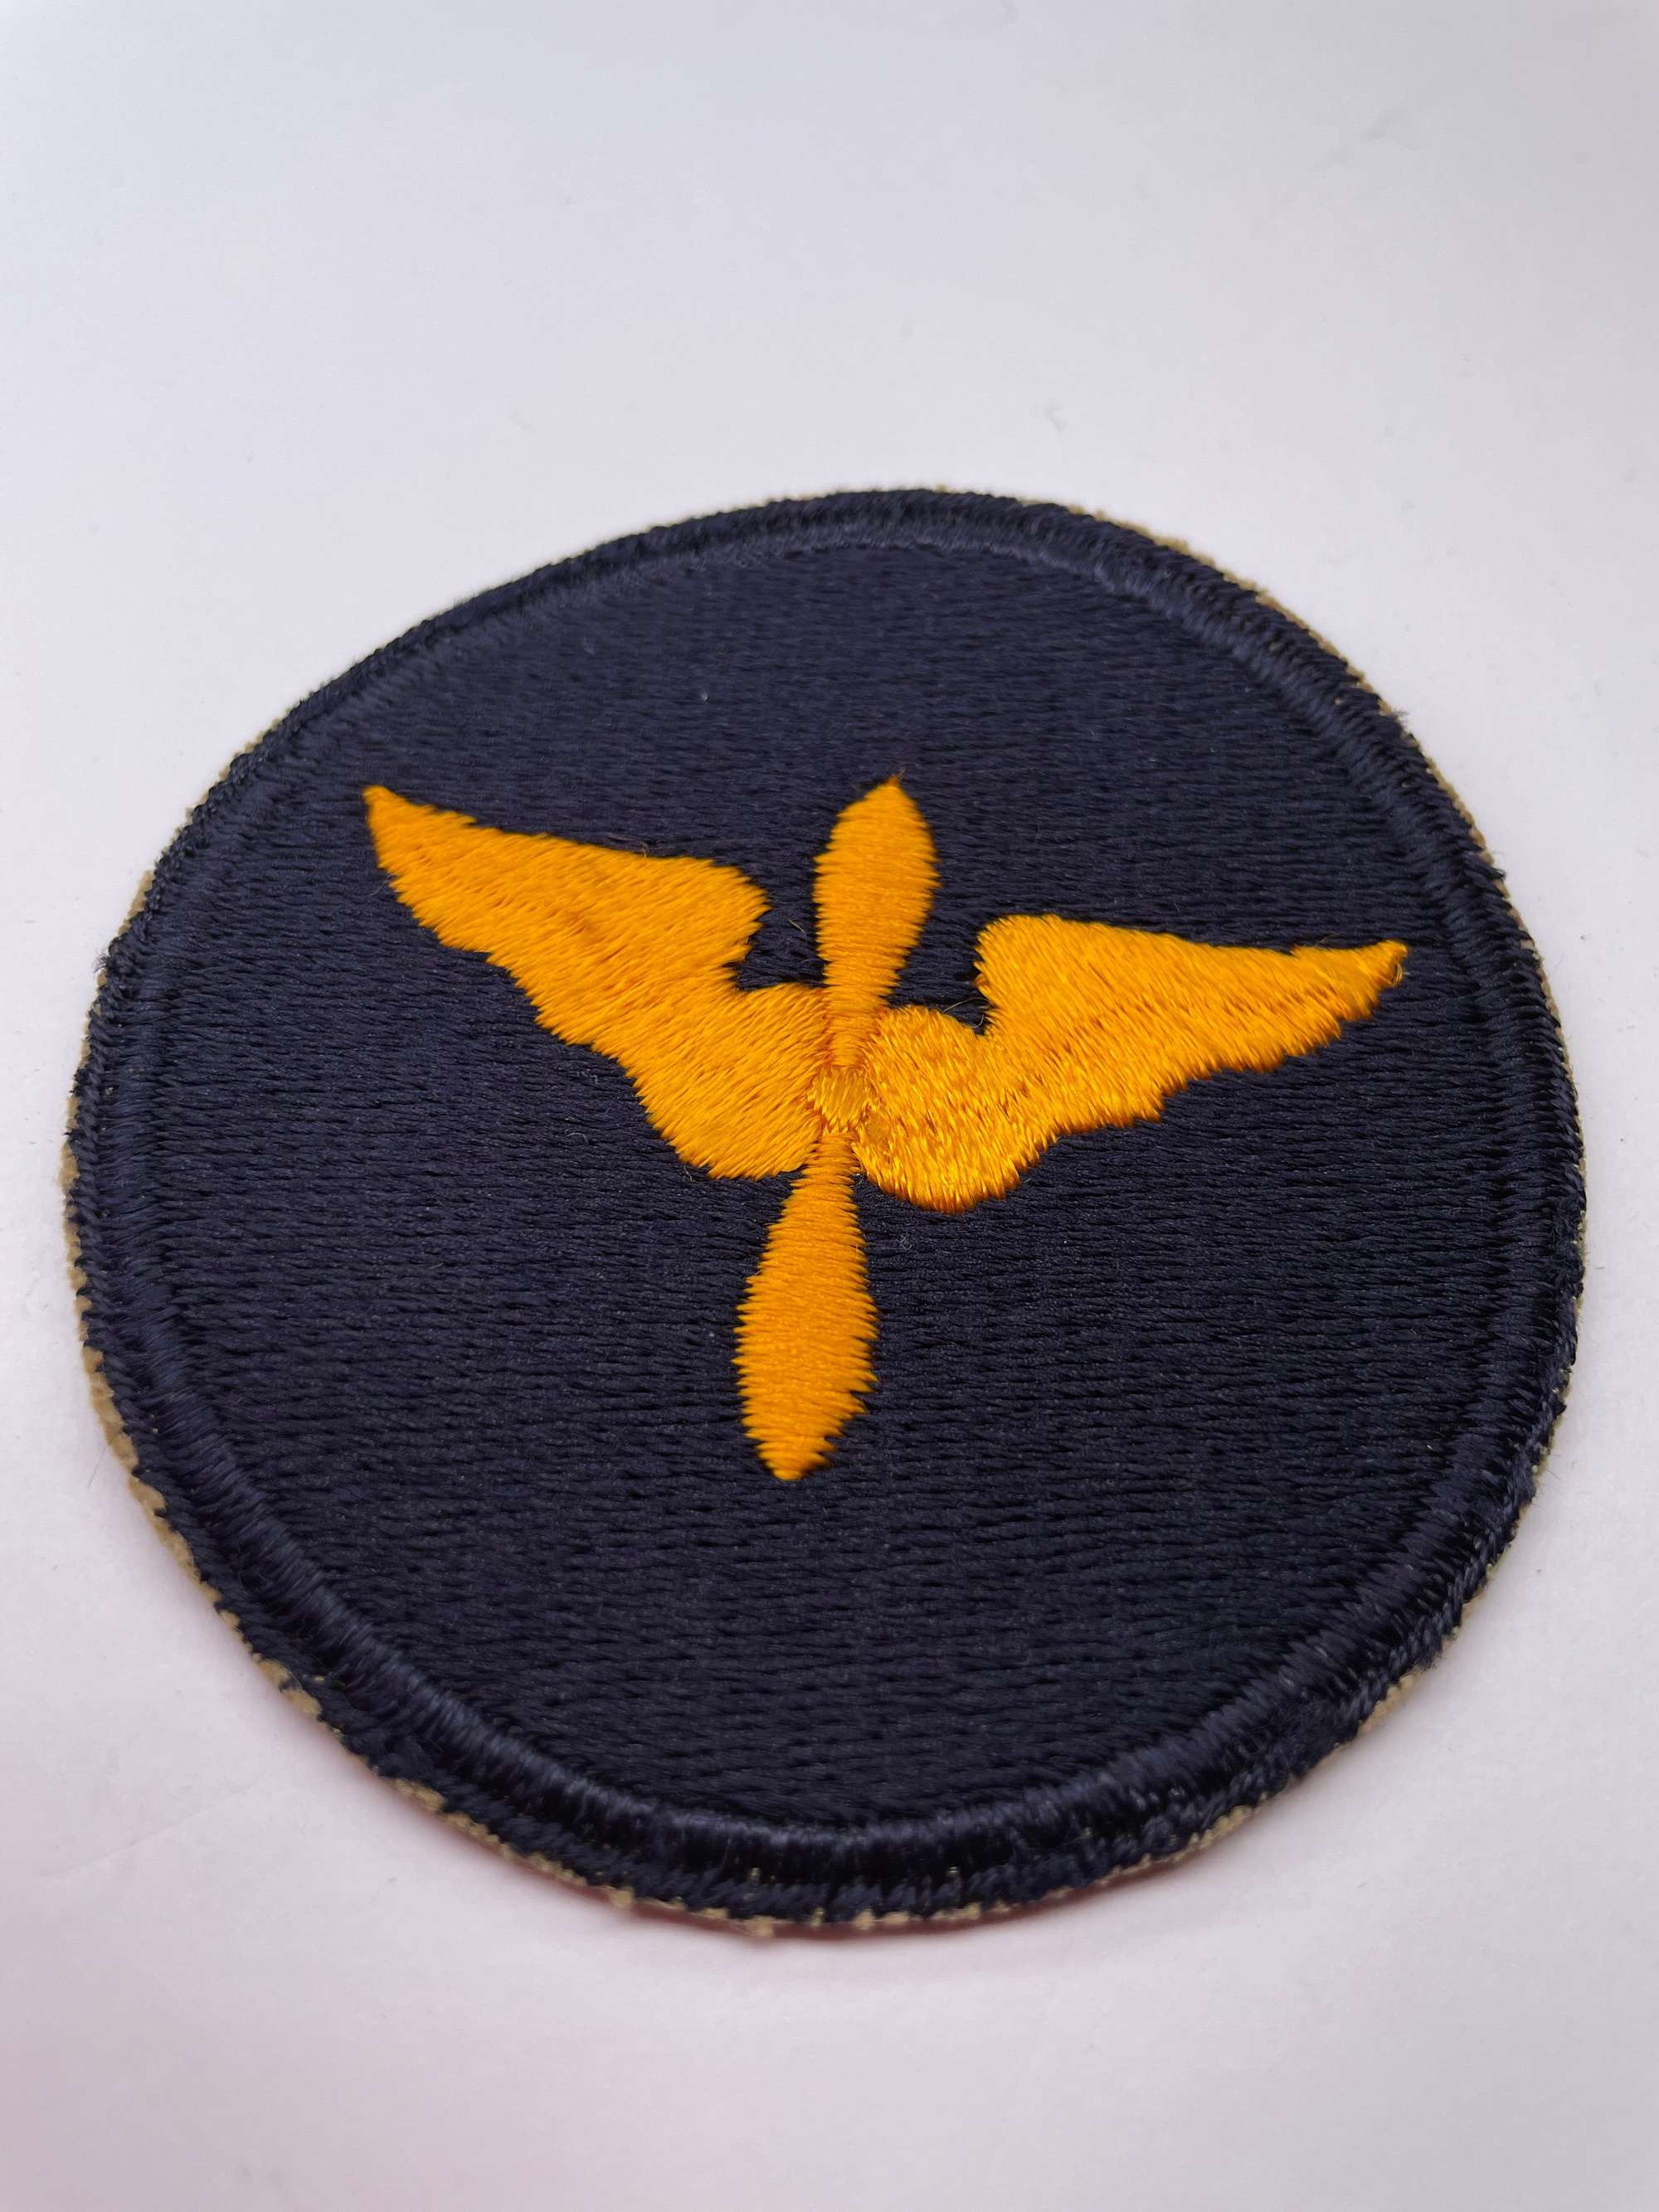 Original World War Two American Air Air Force Cadet Patch, 2nd Version, Greenback